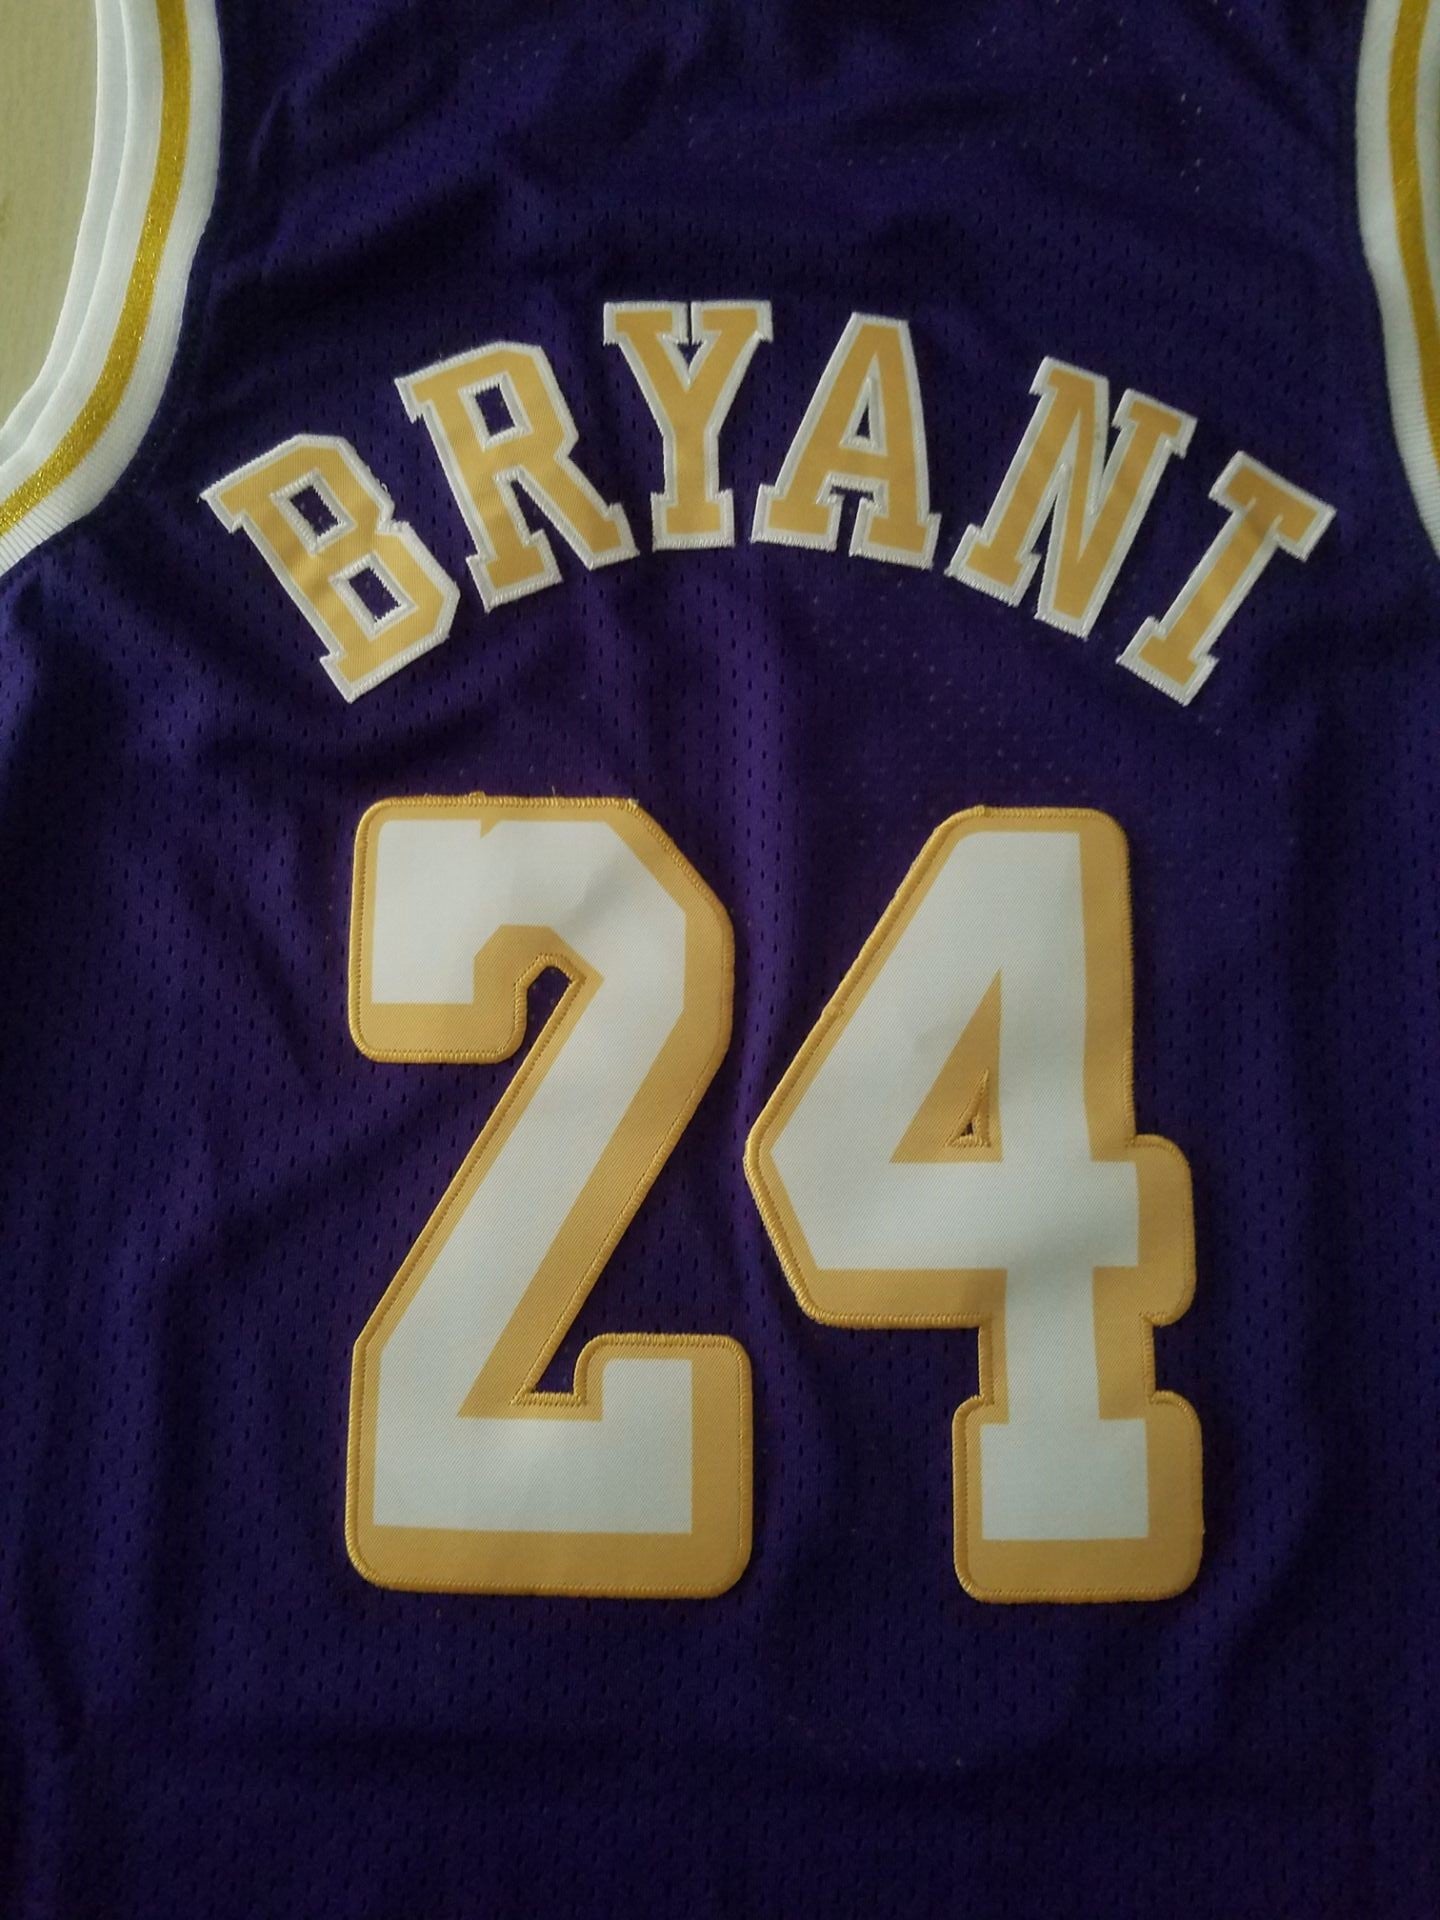 Men's Los Angeles Lakers Kobe Bryant Purple Hardwood Classics Player Jersey